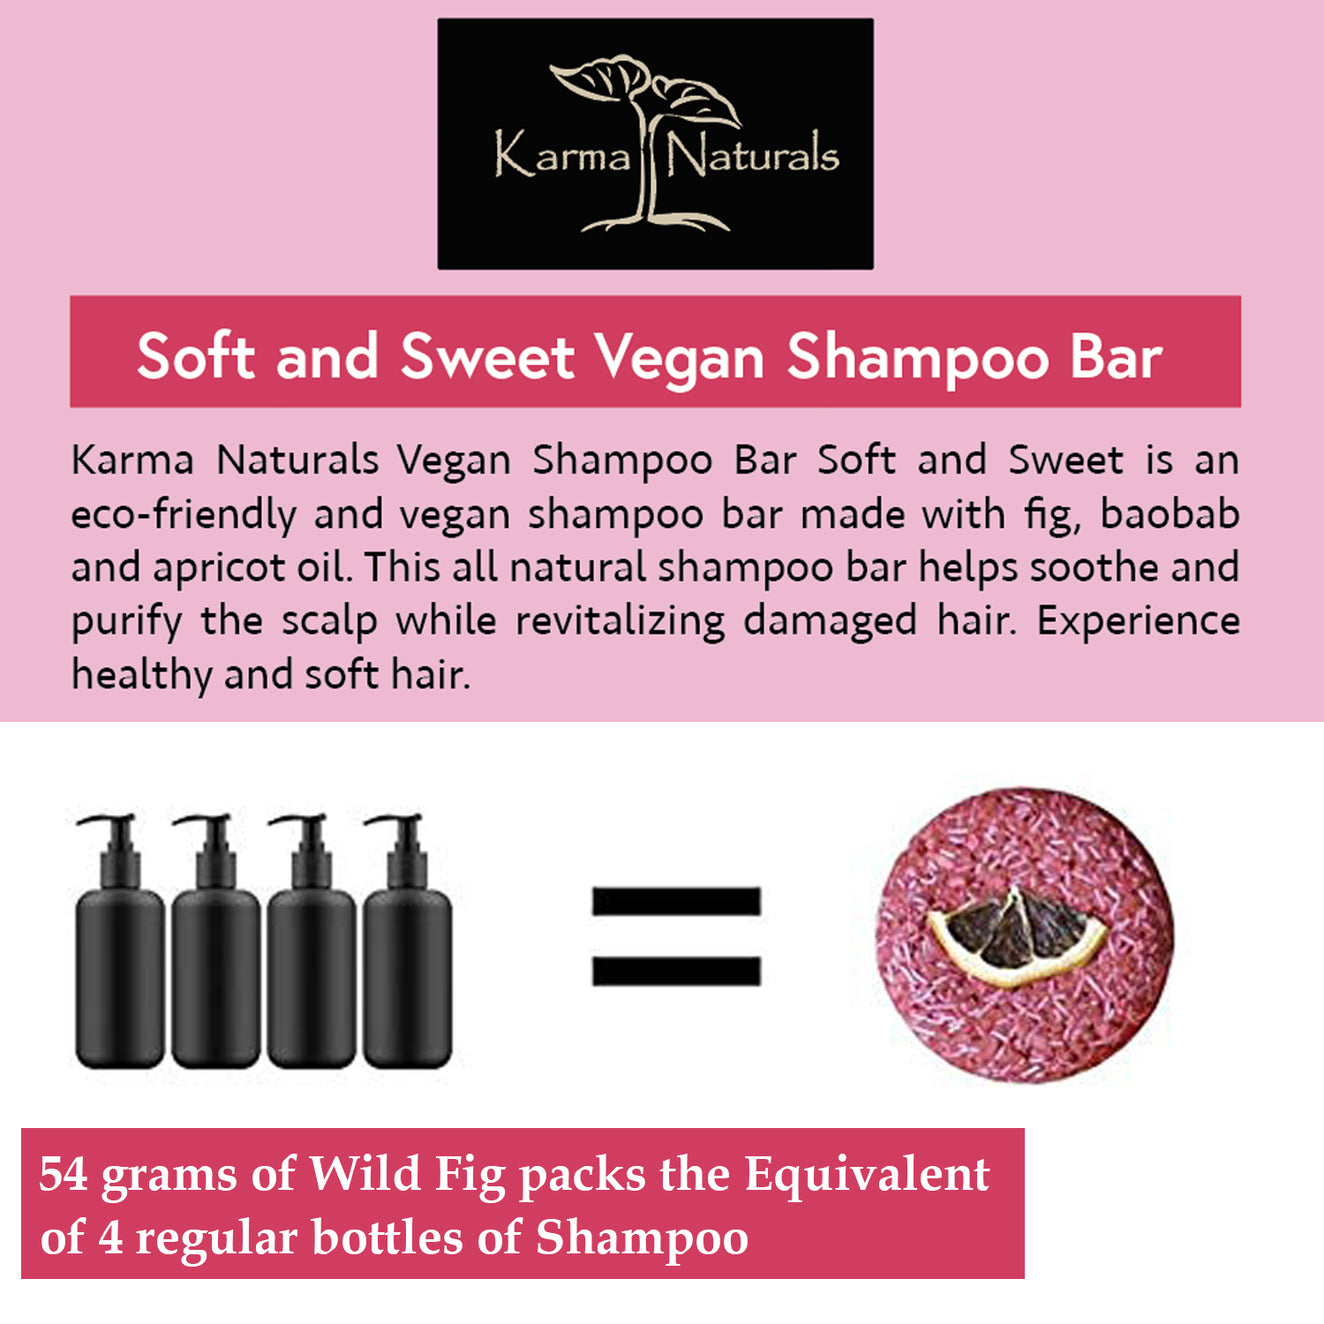 Karma Naturals Soft and Sweet Vegan Shampoo Bar